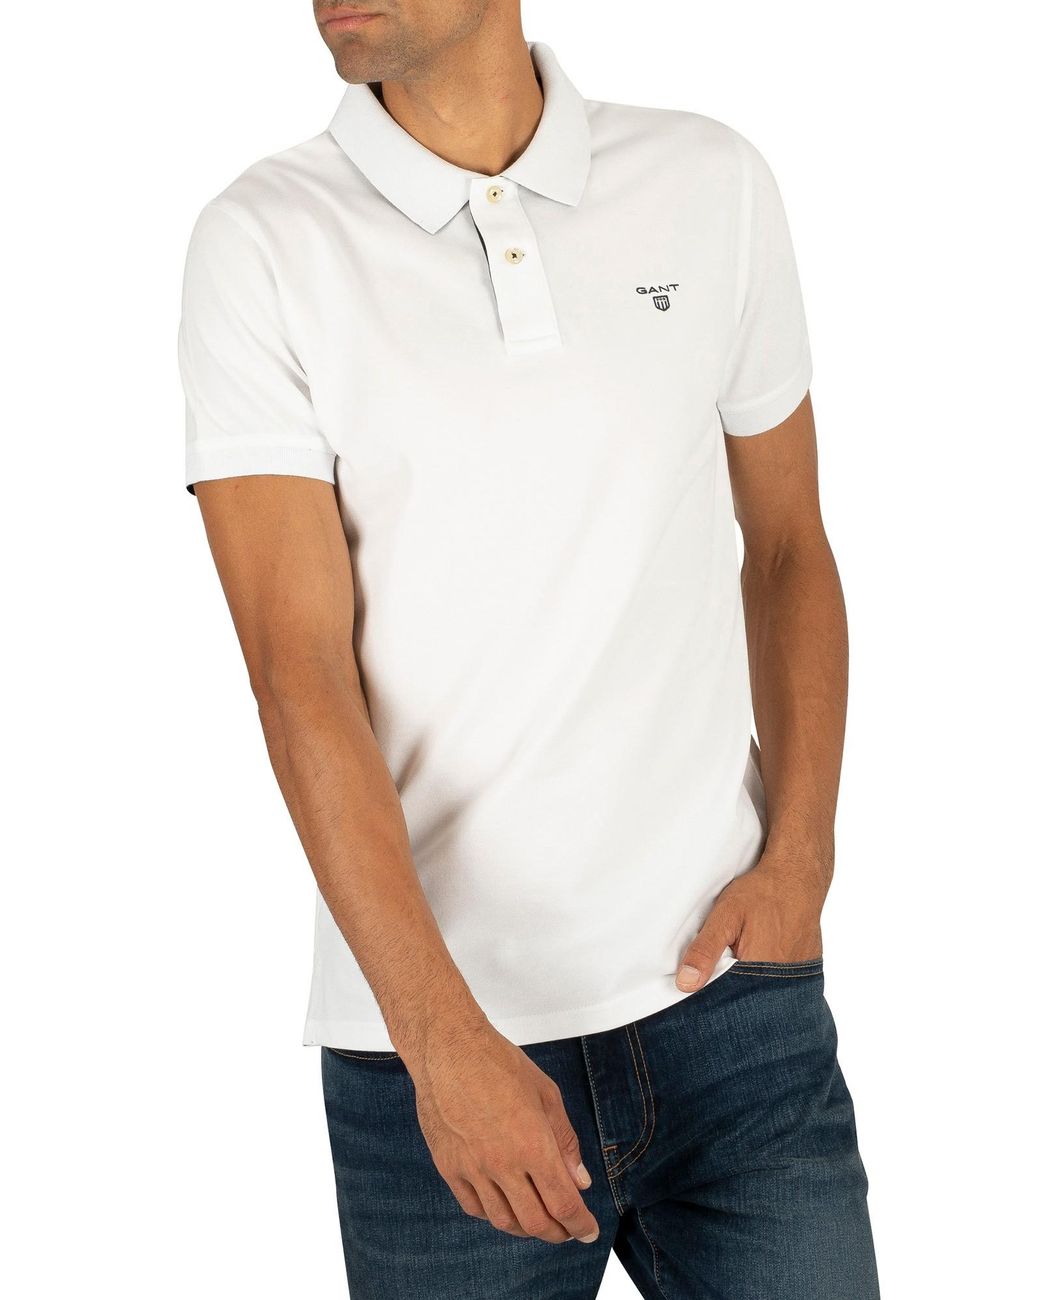 GANT Cotton Contrast Collar Pique Rugger Polo Shirt in White for Men - Lyst